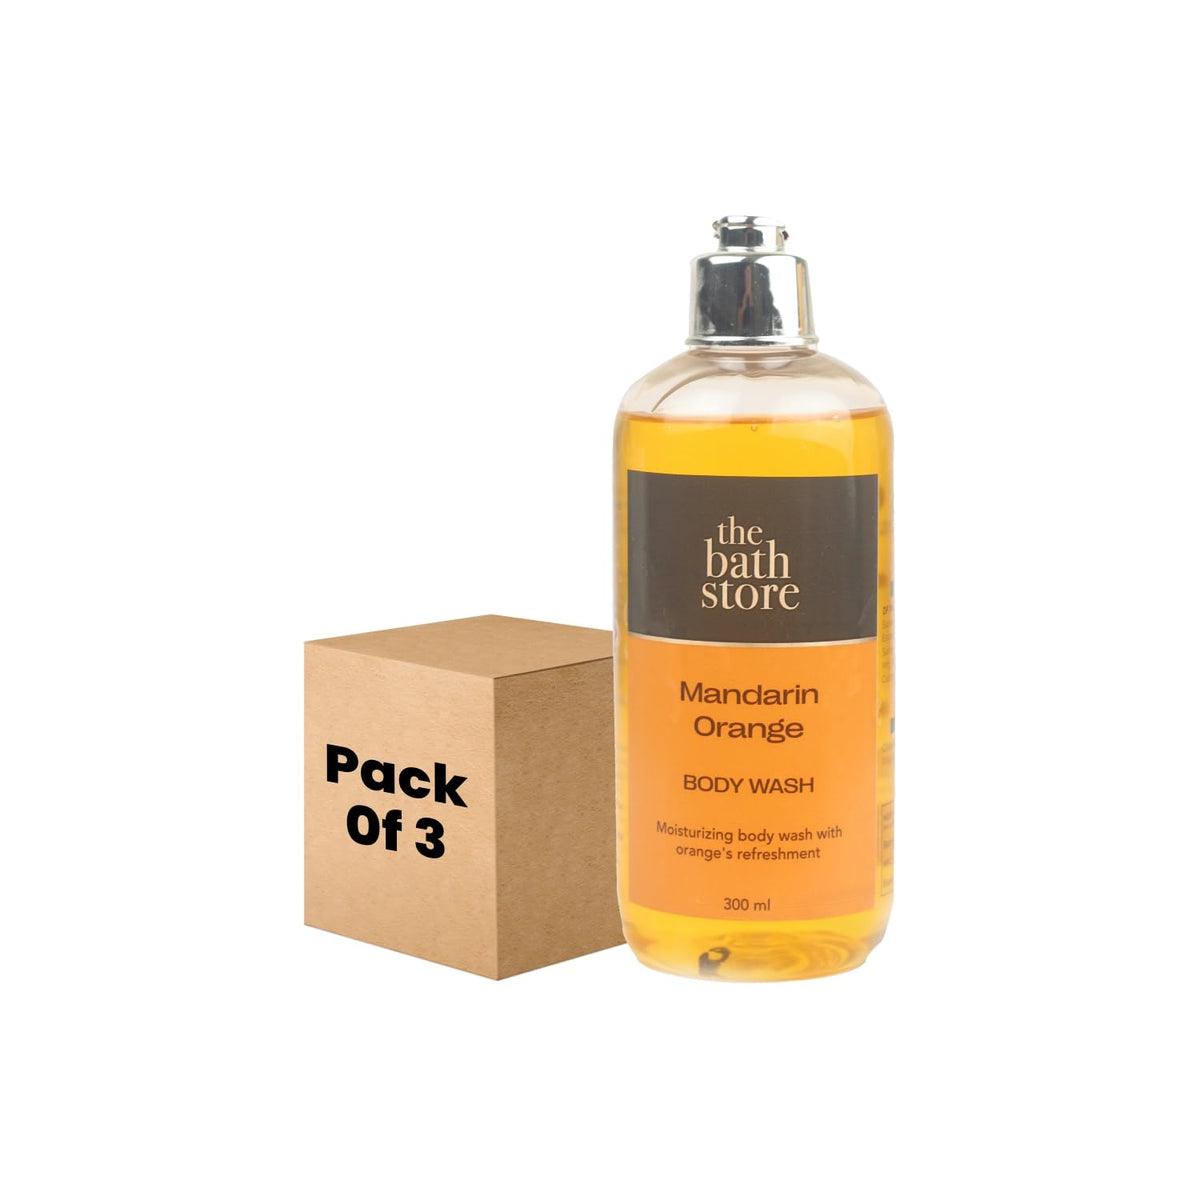 The Bath Store Mandarin Orange Body Wash - Deeply Cleansing | Nourishing Liquid Soap | Men and Women - 300ml (Pack of 3)